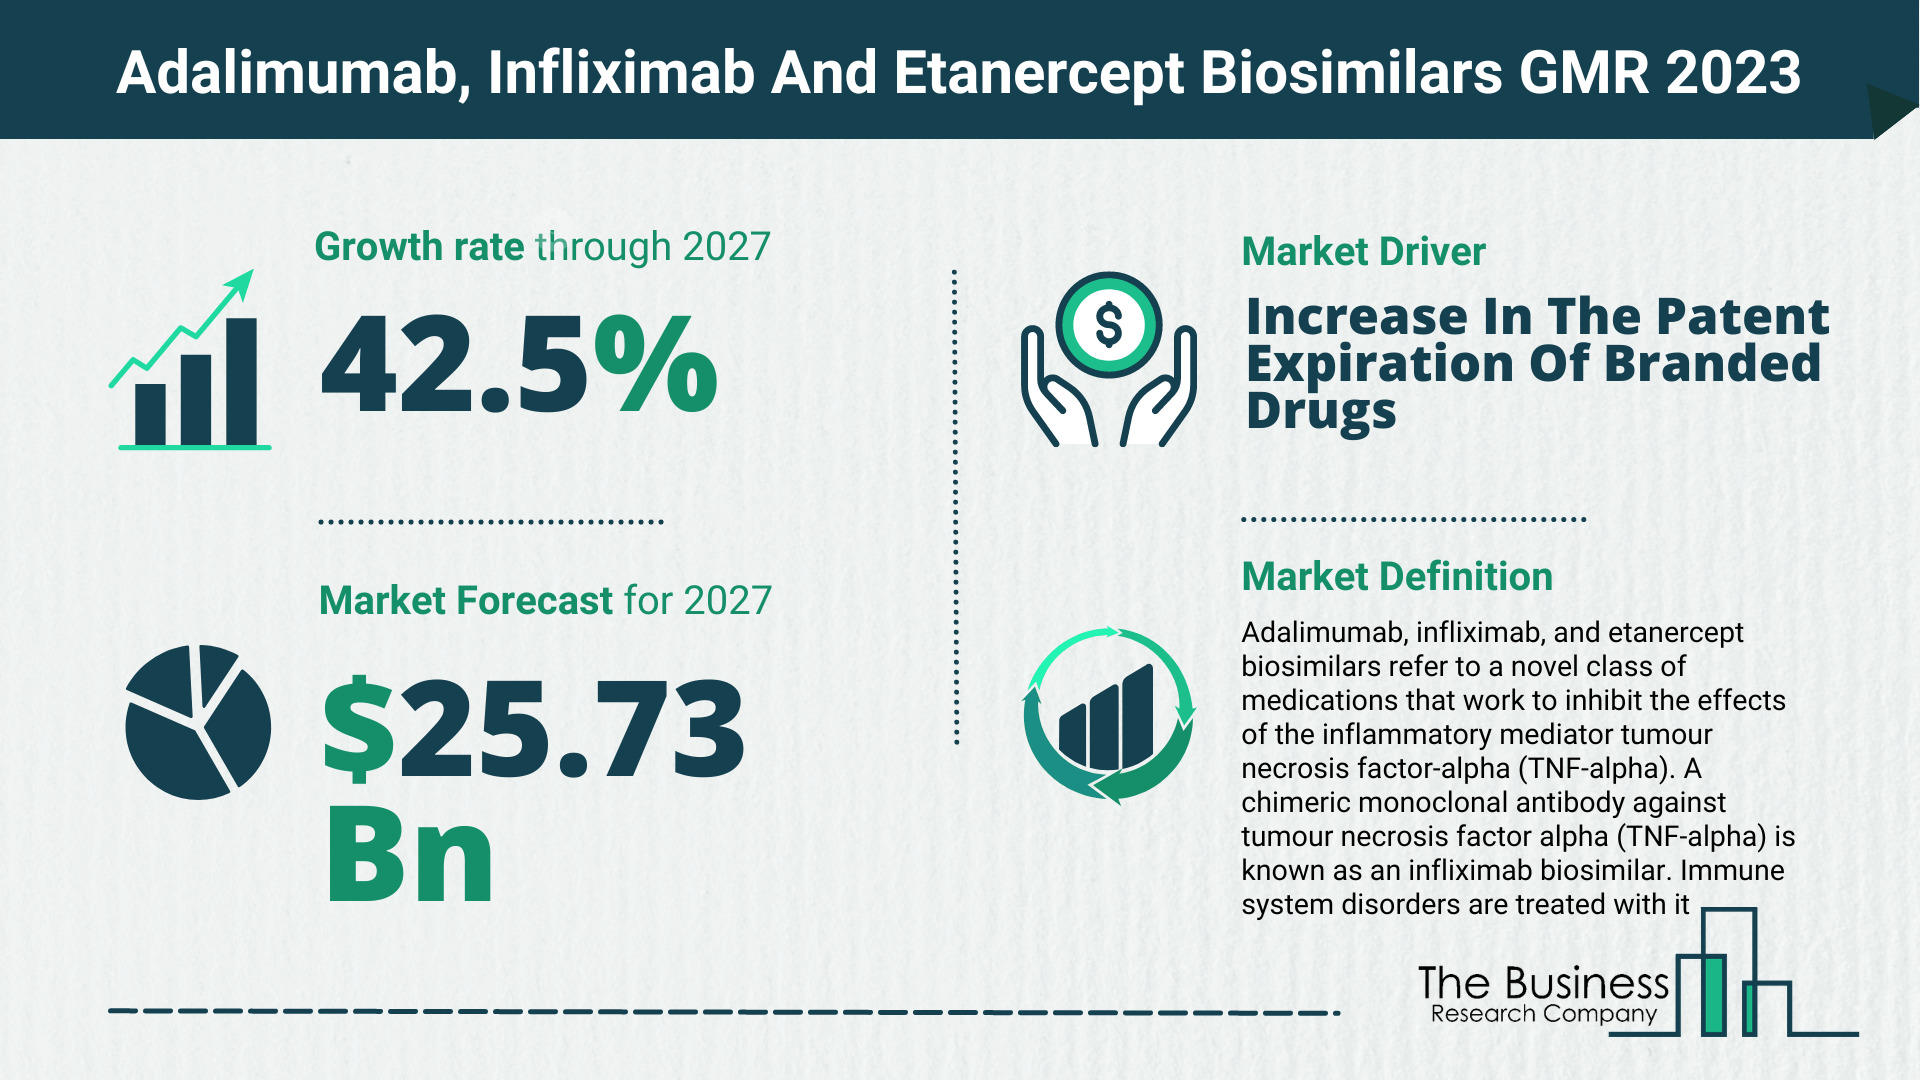 What Will The Adalimumab, Infliximab And Etanercept Biosimilars Market Look Like In 2023?